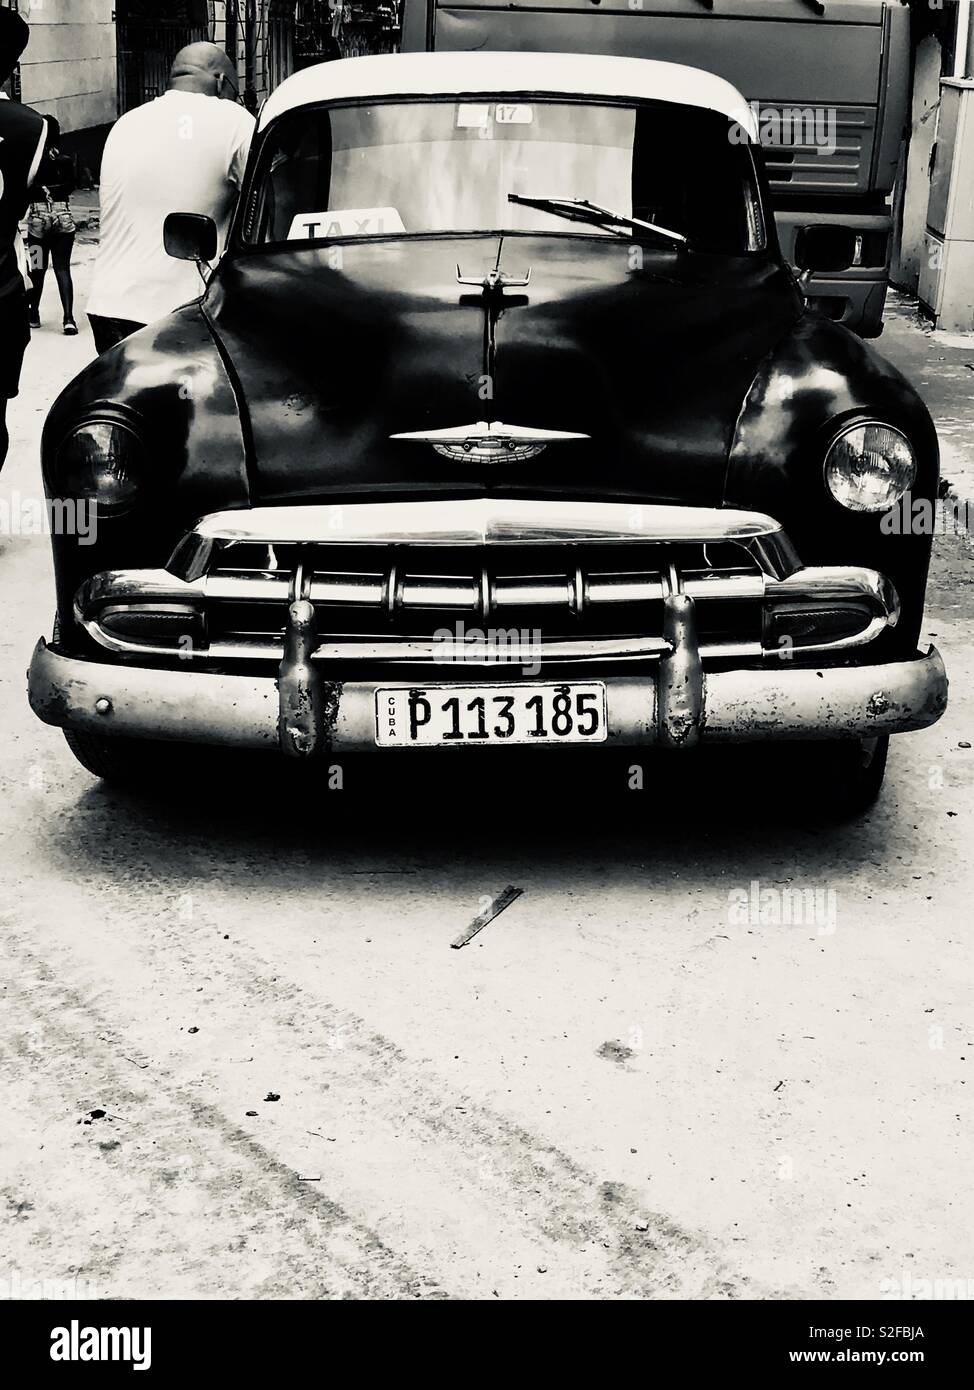 Classic Black Taxi Cab in Havana Cuba Stock Photo